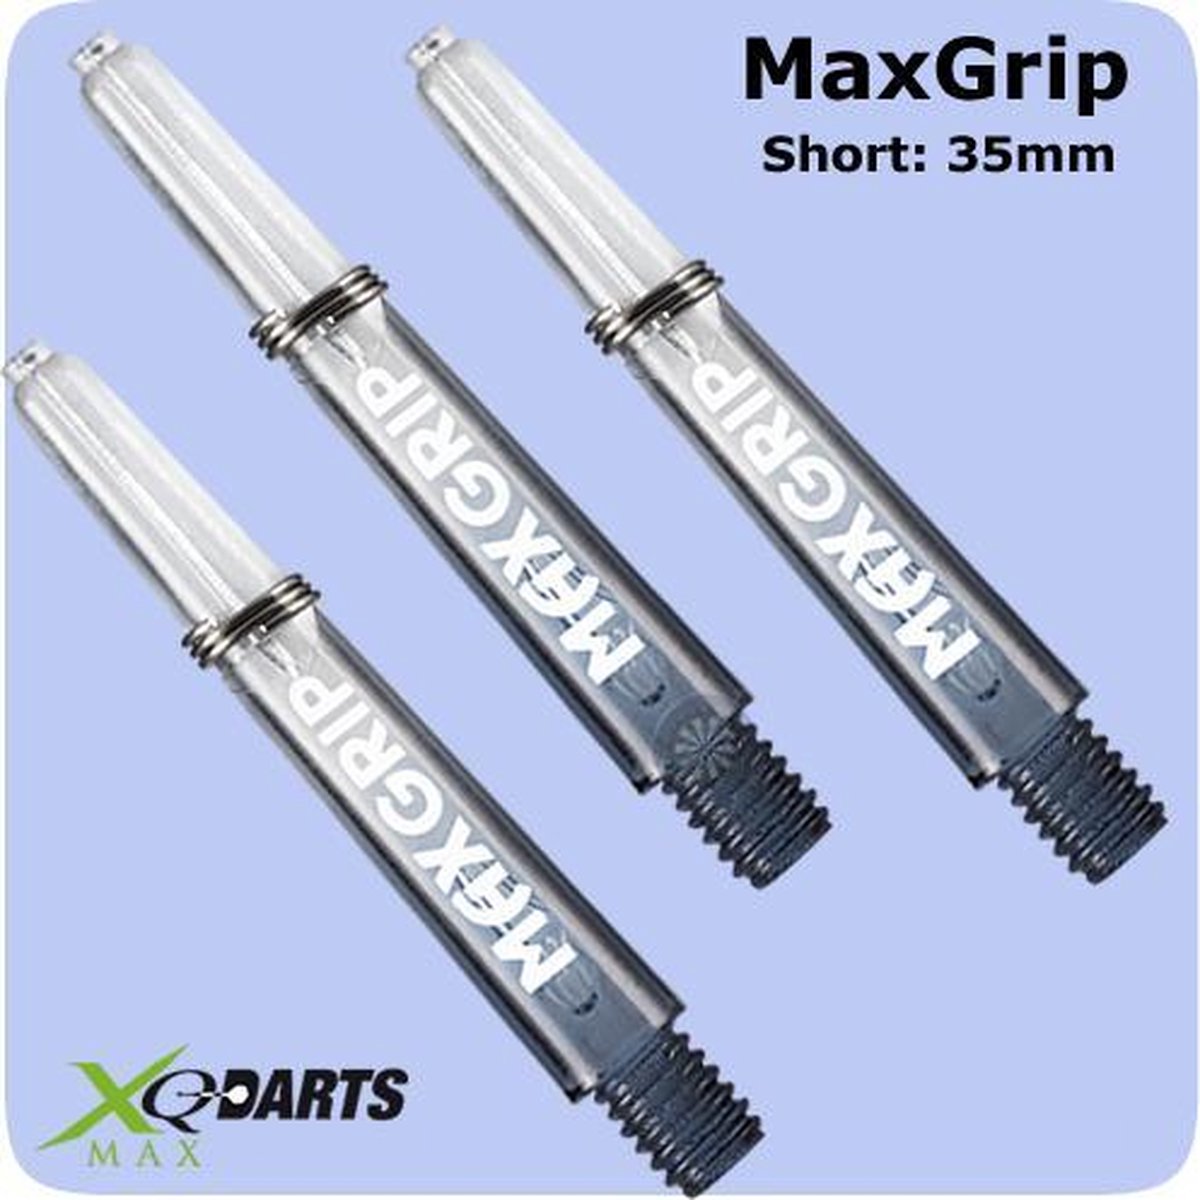 Dragon darts - Maxgrip - 5 sets (15 stuks) - dart shafts - zwart-doorzichtig - darts shafts - short